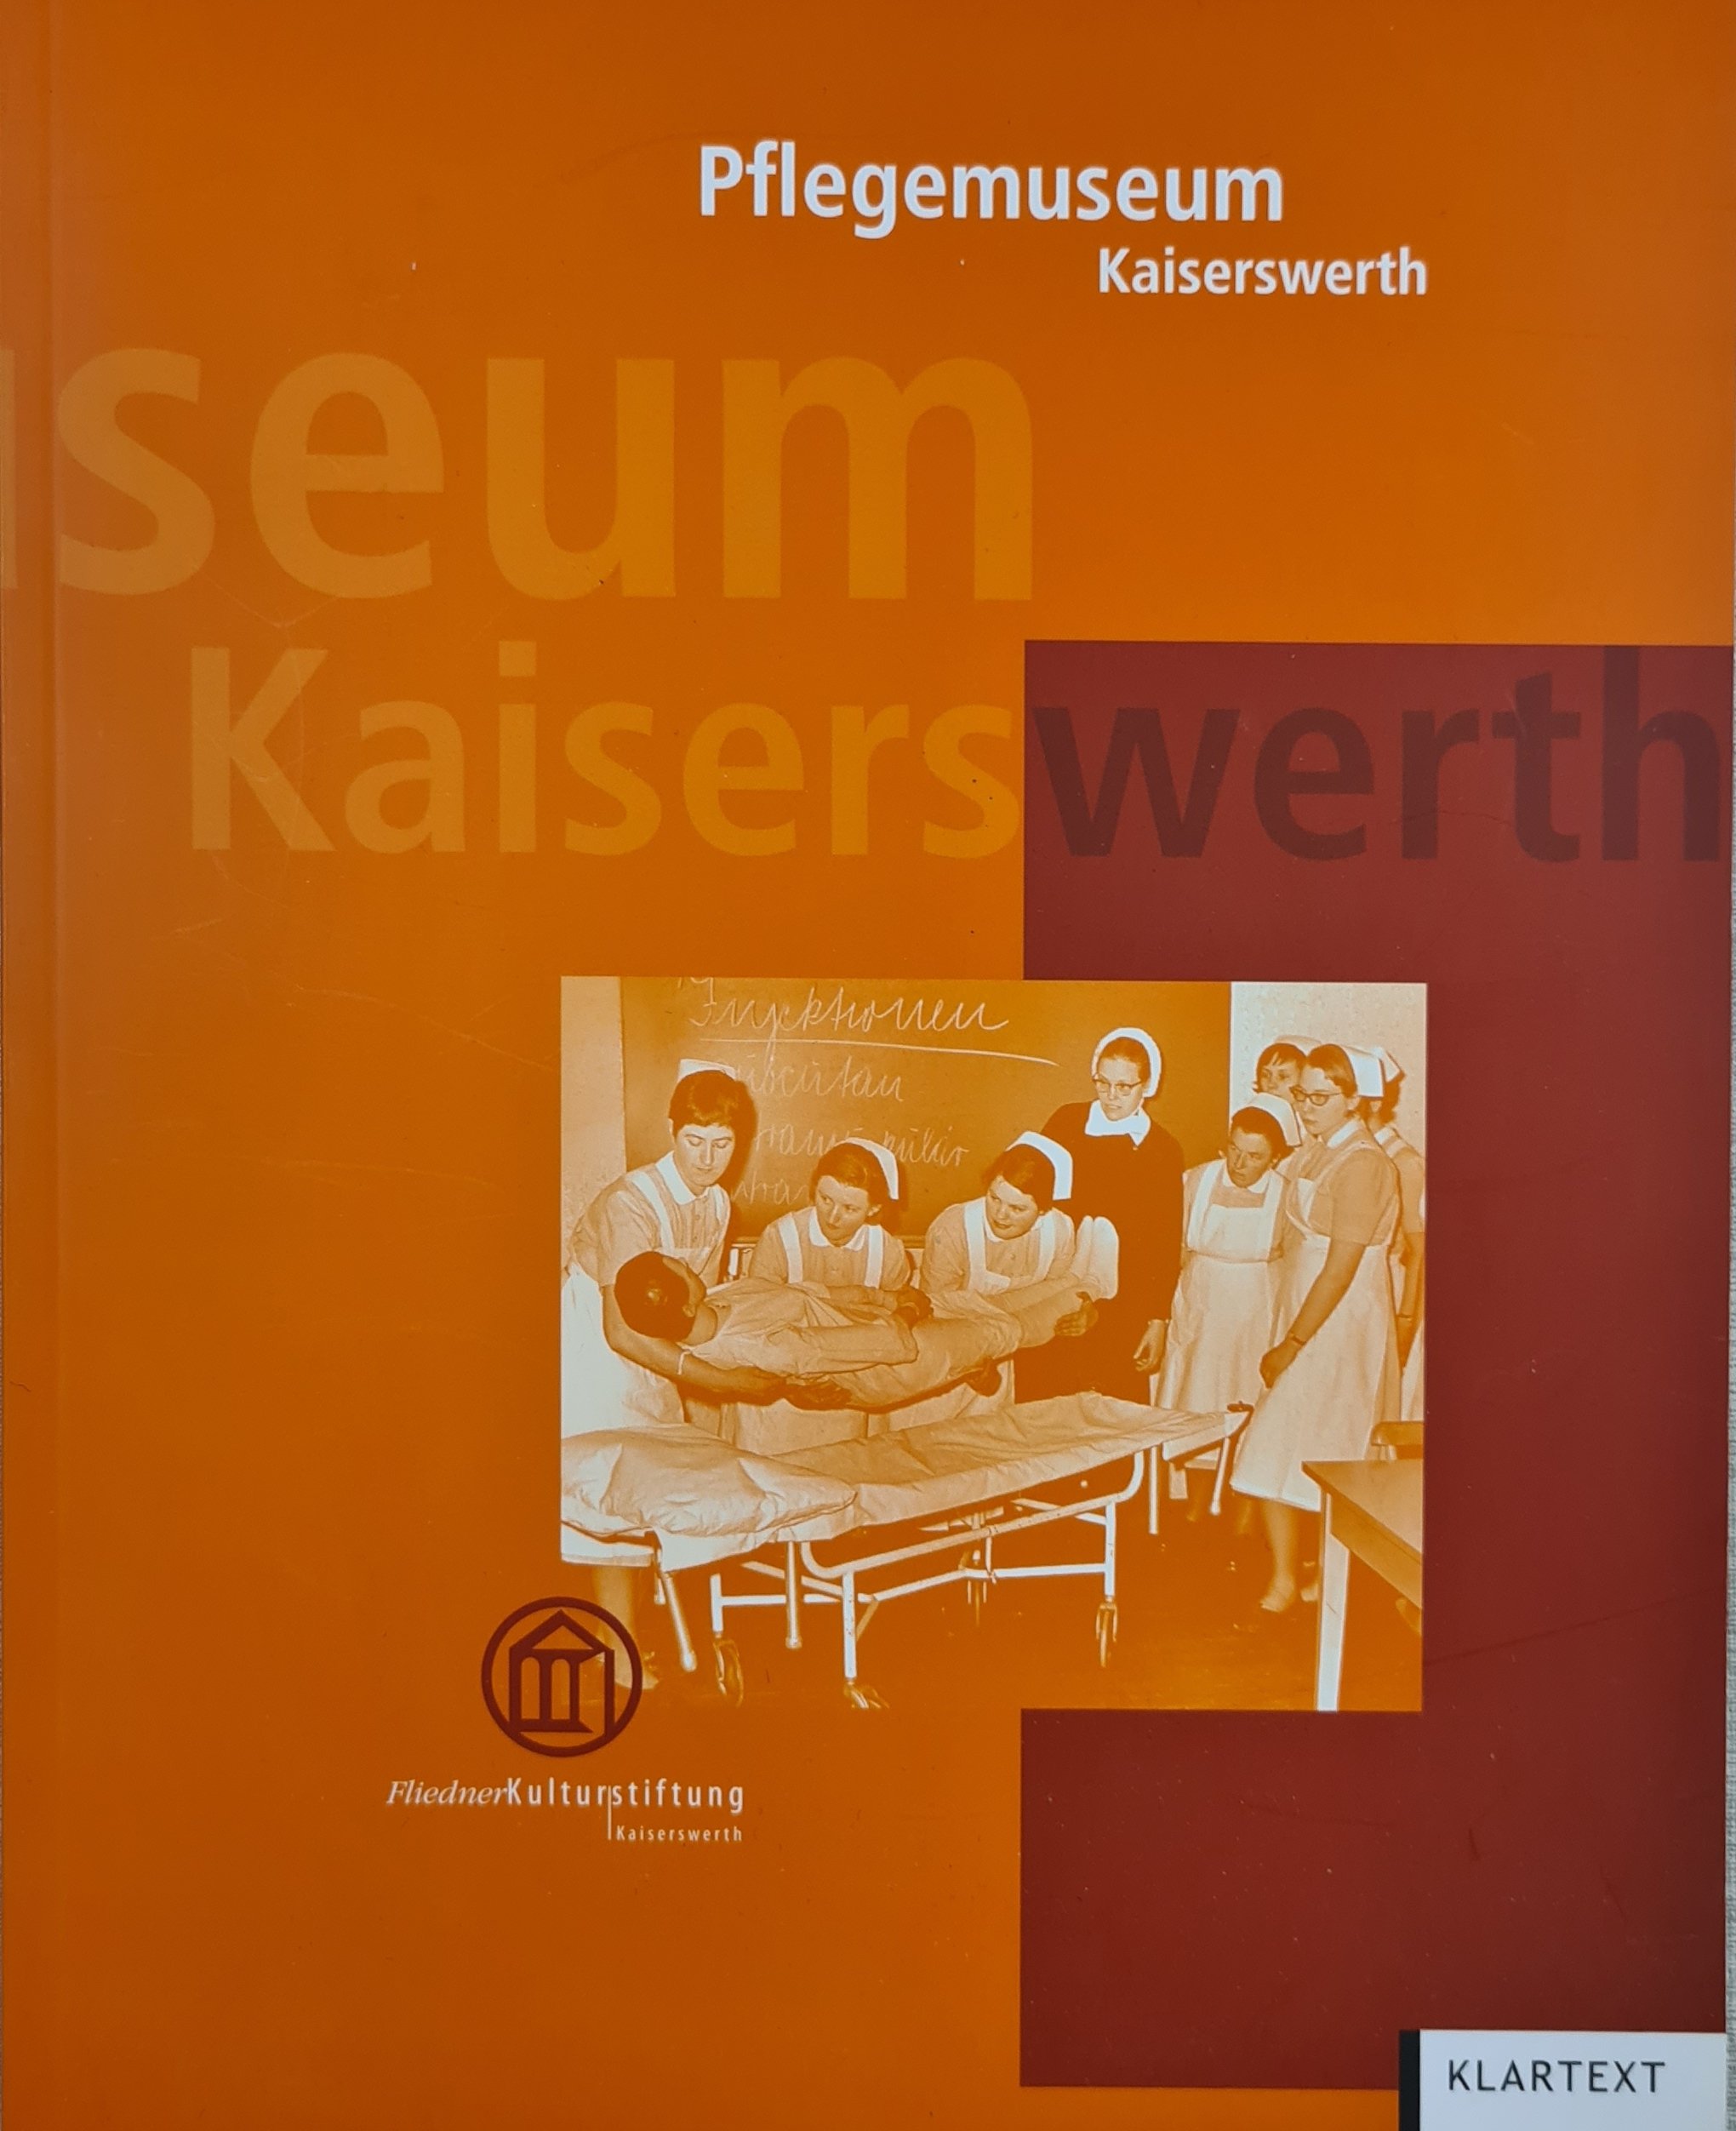 Pflegemuseum Kaiserswerth (Krankenhausmuseum Bielefeld e.V. CC BY-NC-SA)